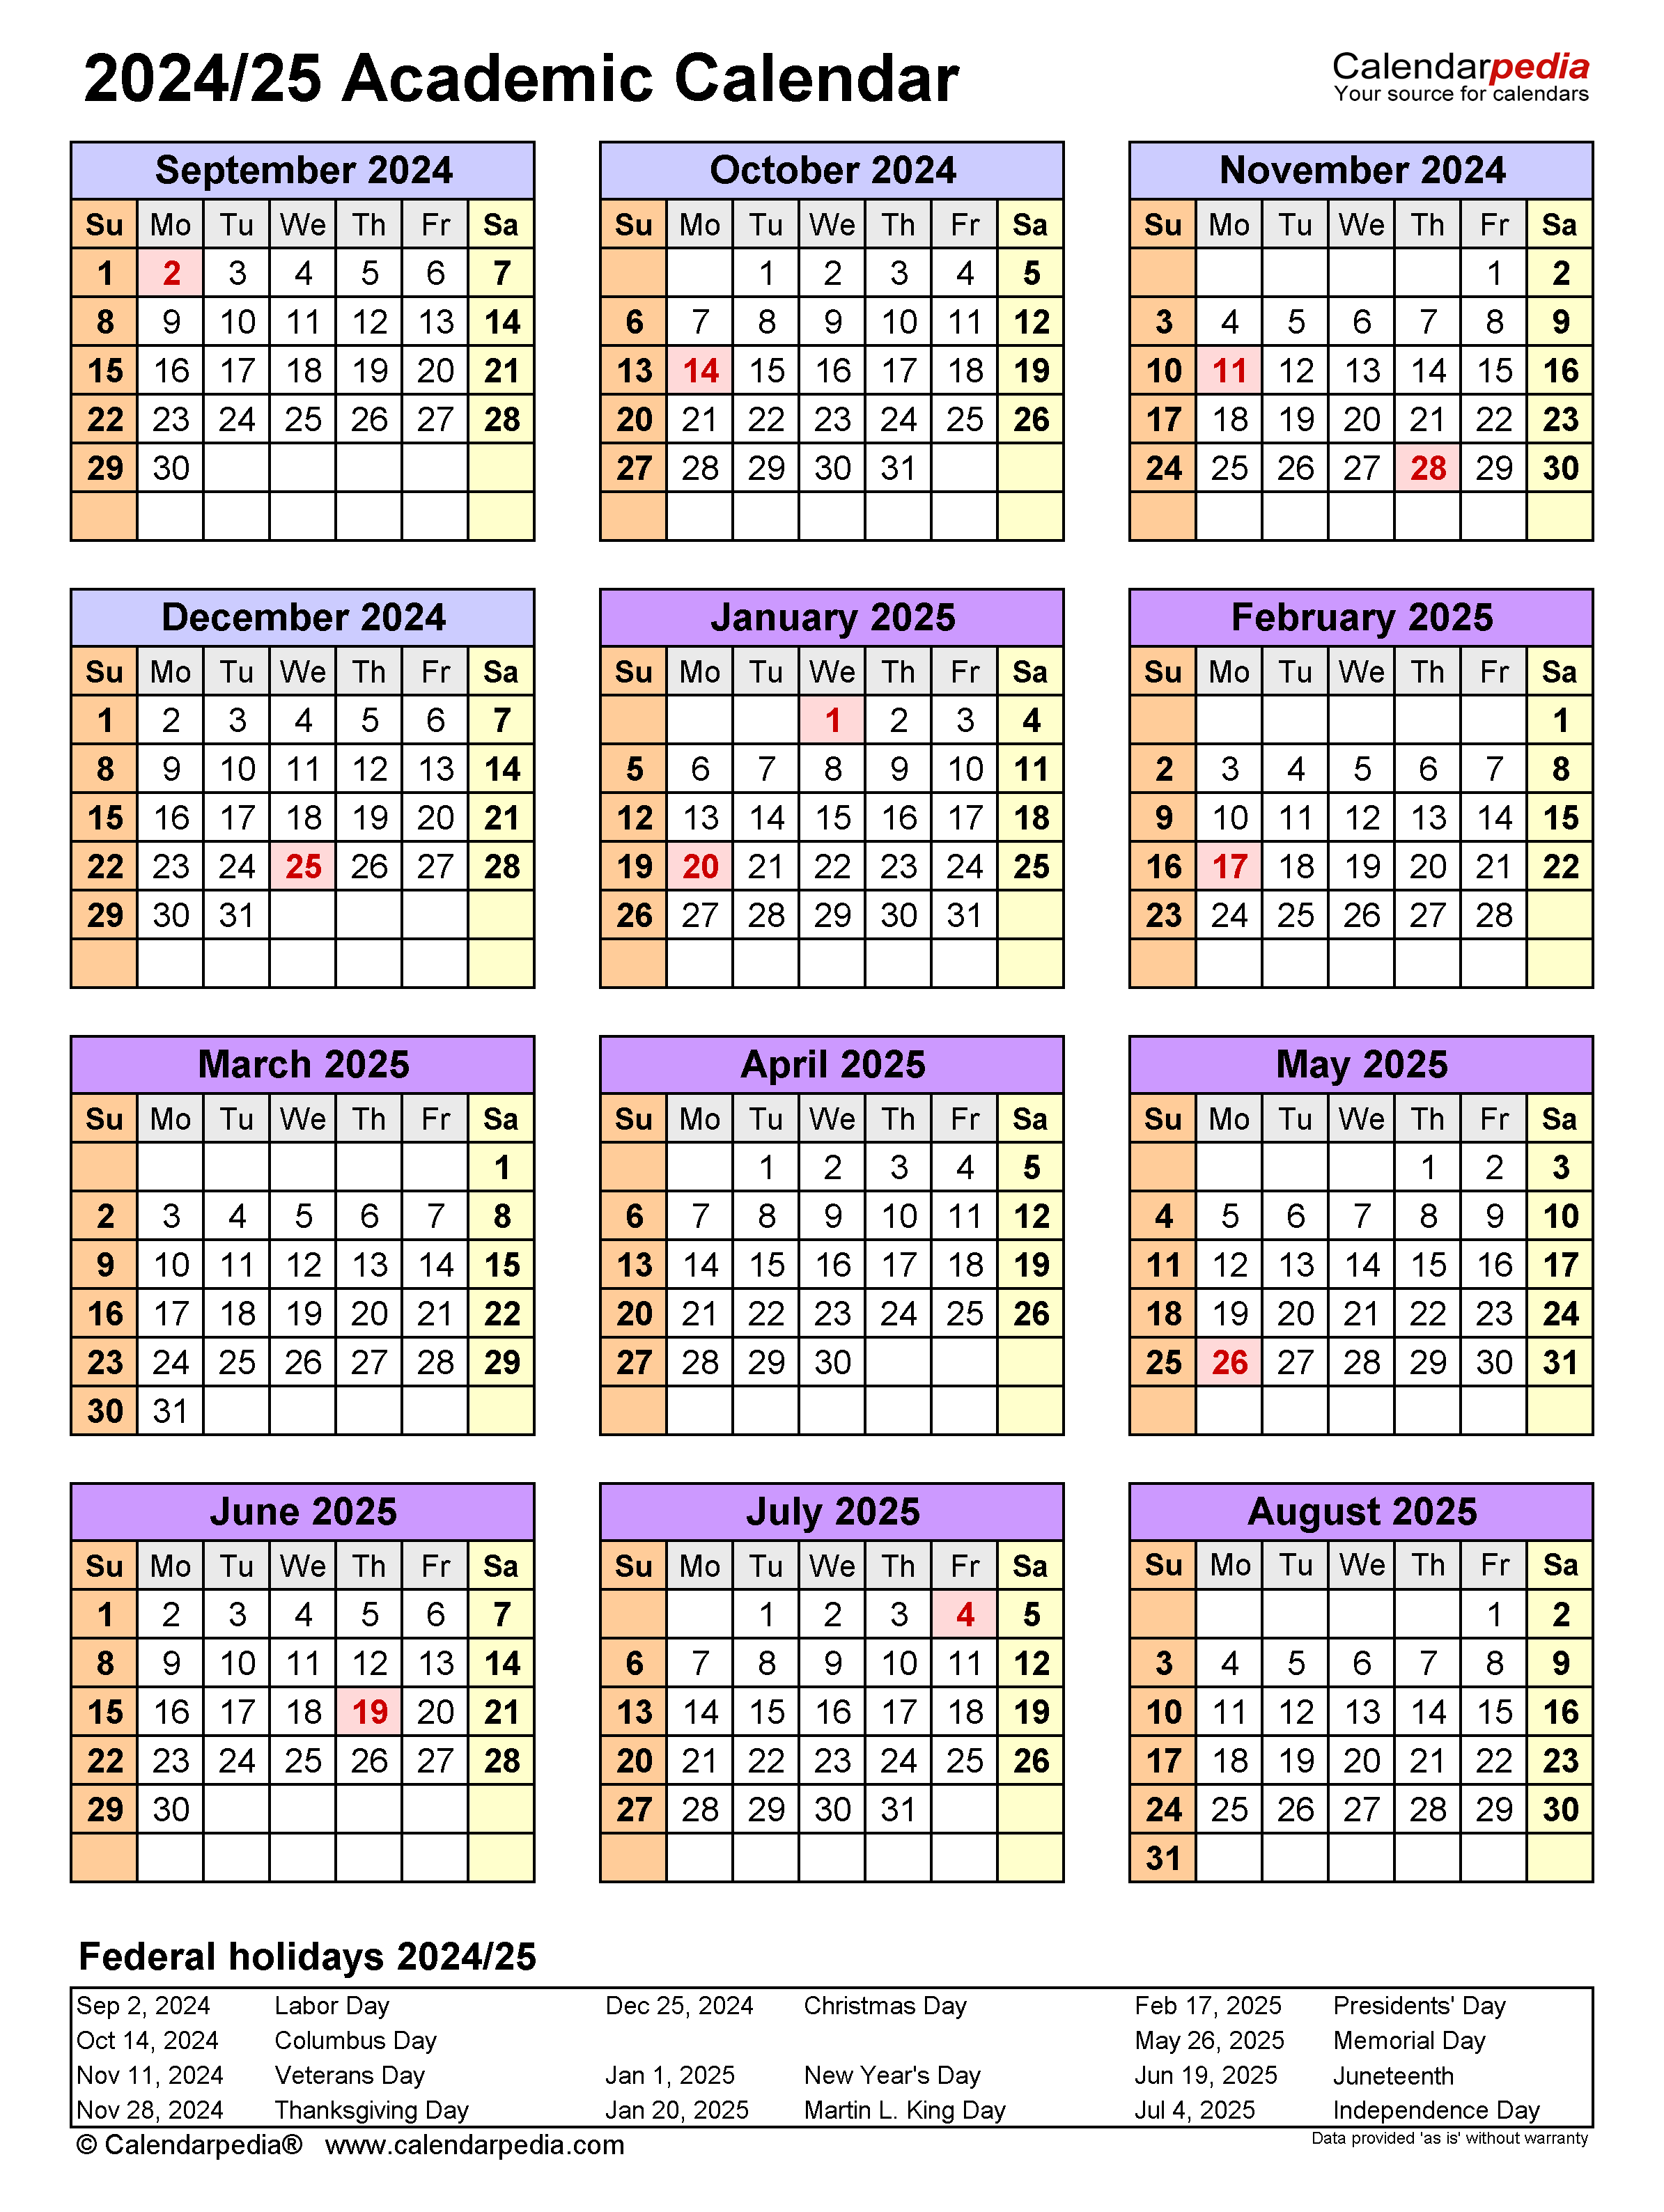 Butler University Spring 2025 Calendar